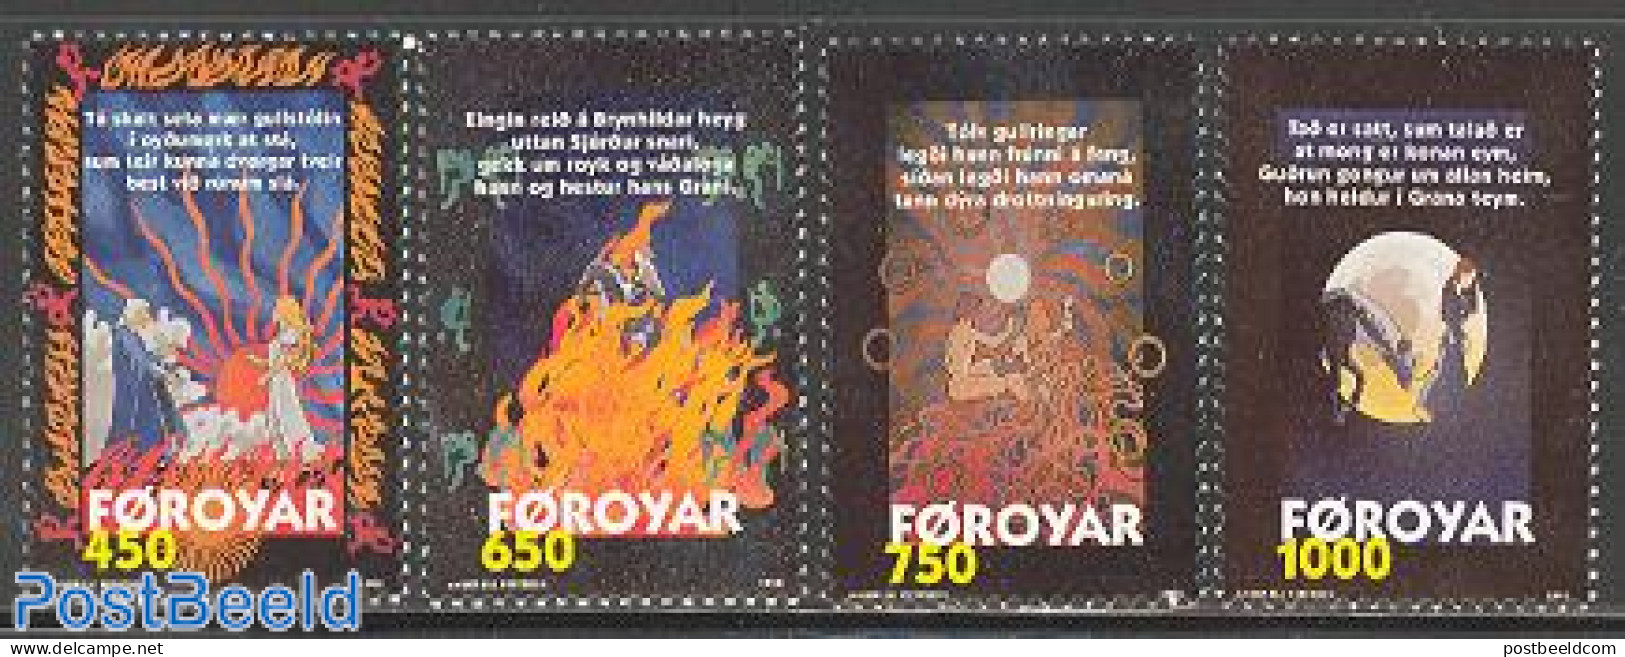 Faroe Islands 1998 Nordic Legends 4v, Mint NH, Art - Fairytales - Fairy Tales, Popular Stories & Legends